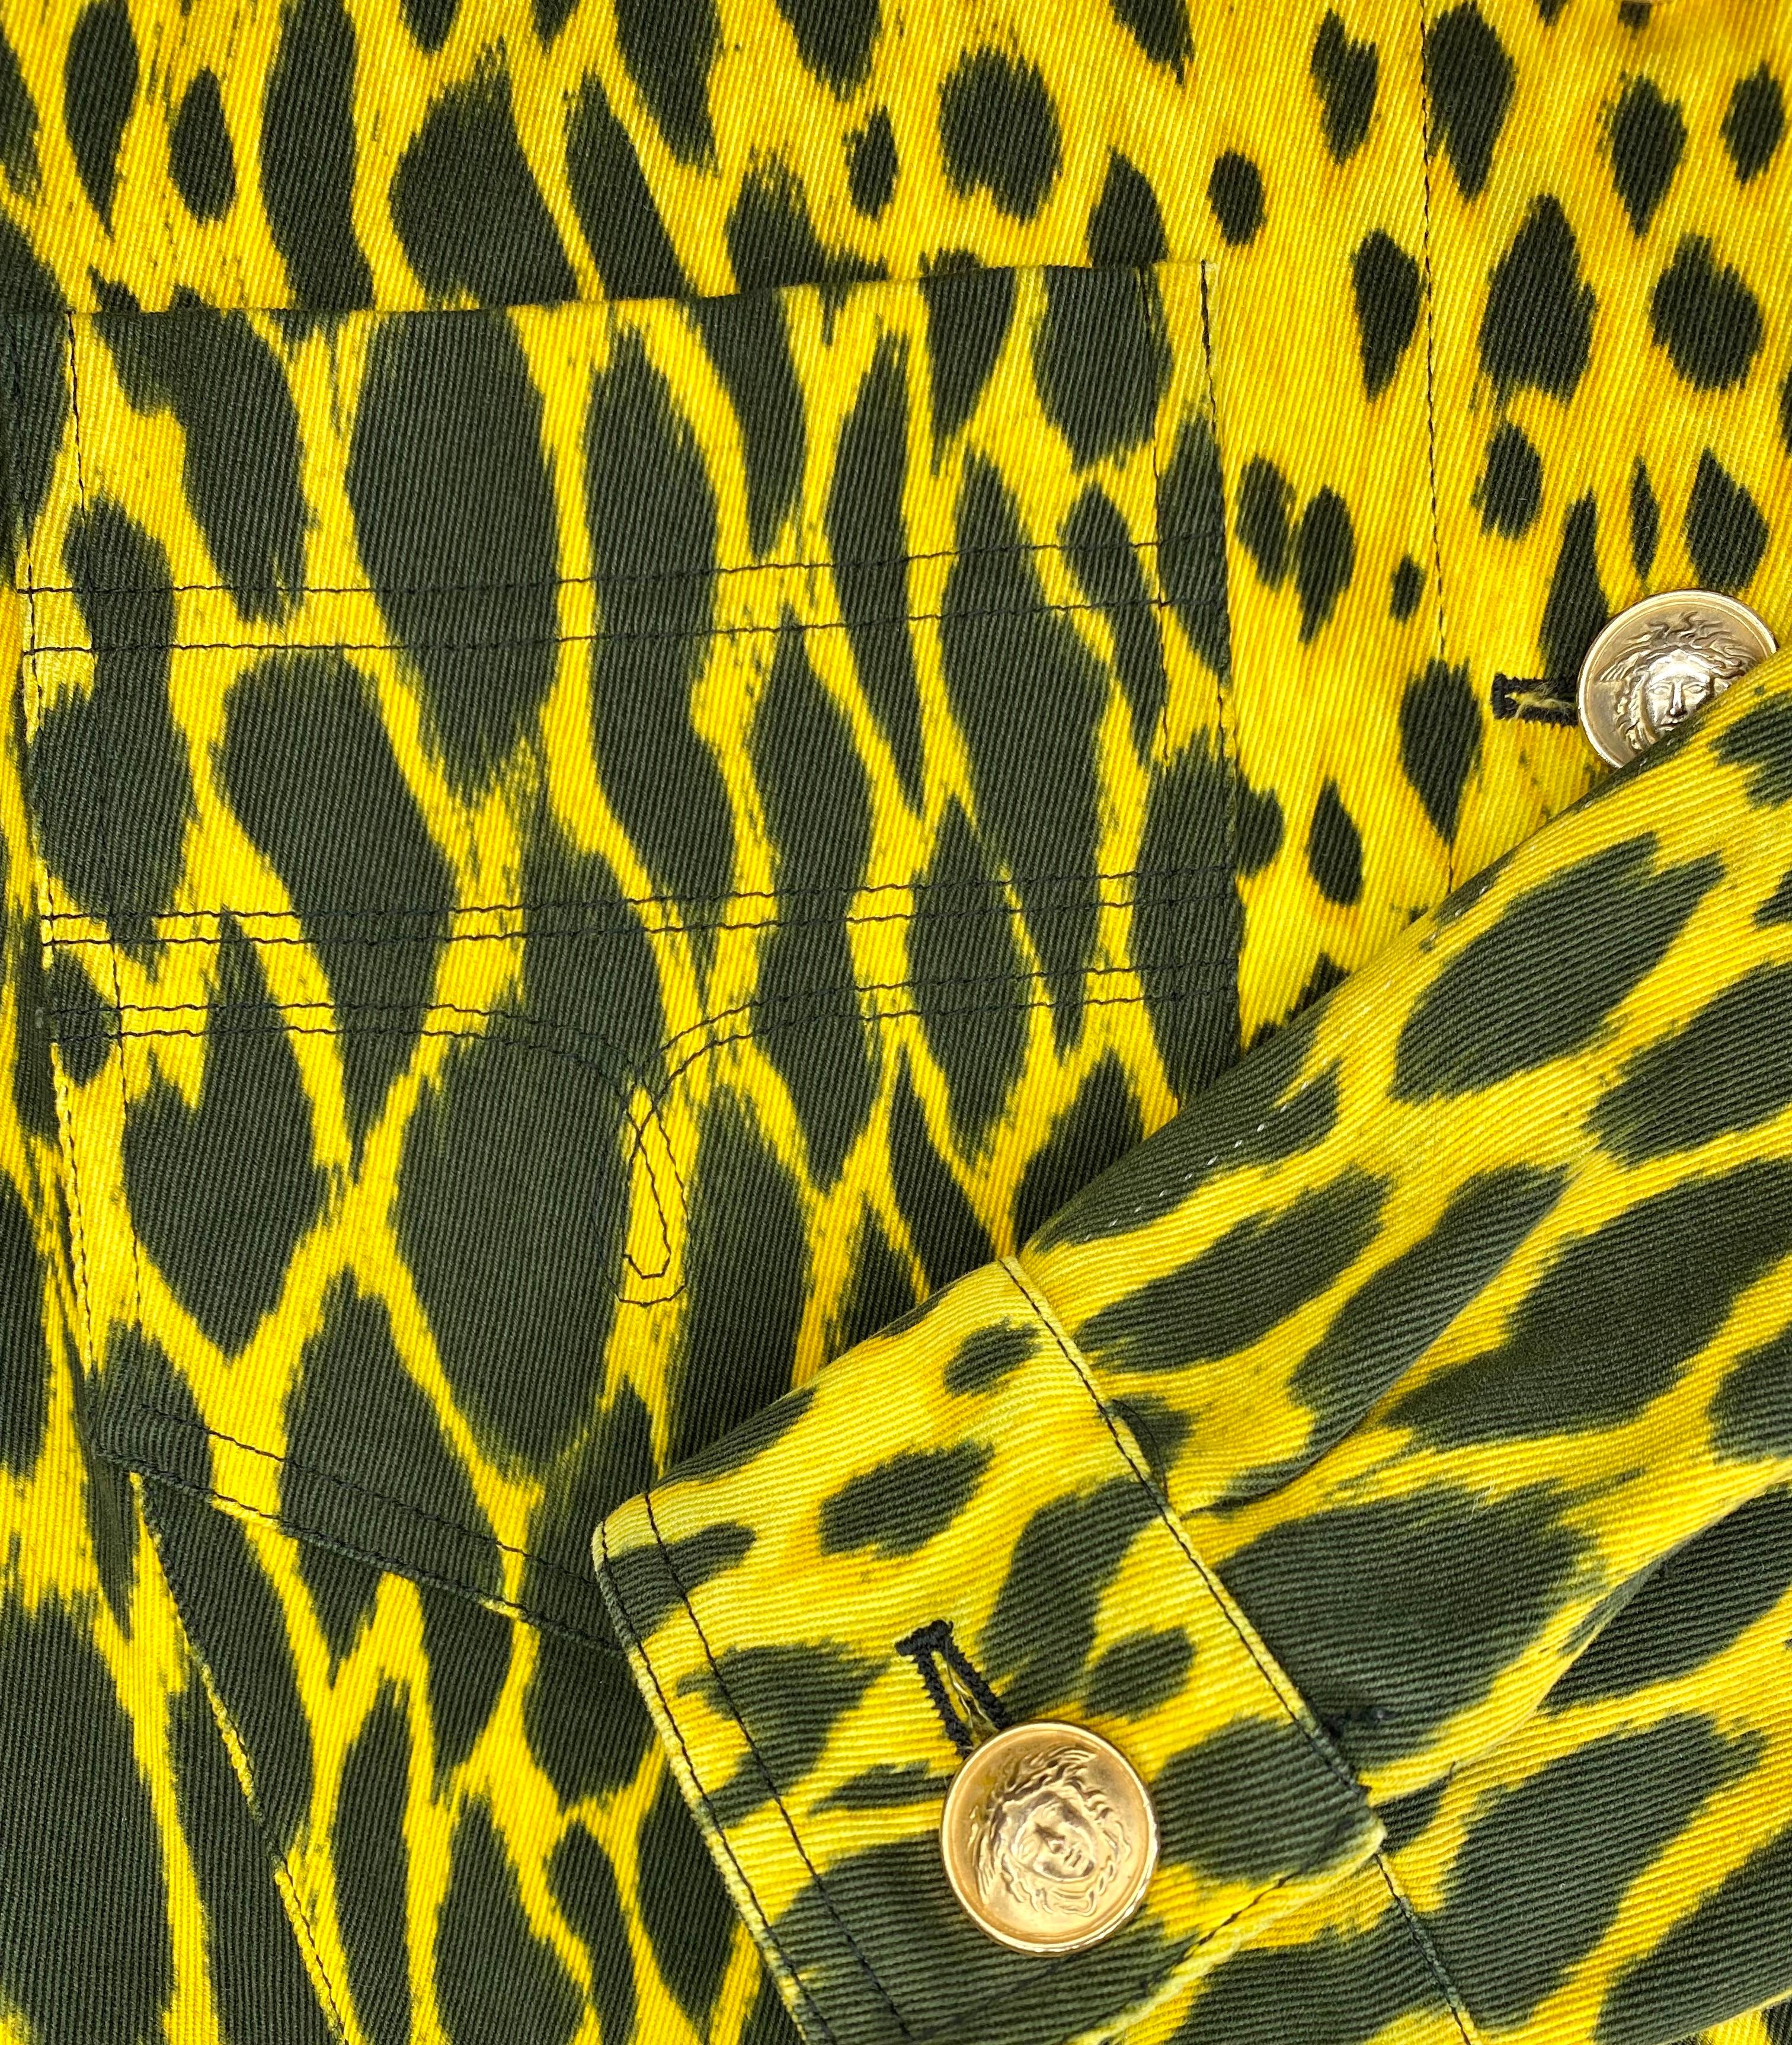 S/S 1992 Gianni Versace Leopard Printed Denim Jacket  1